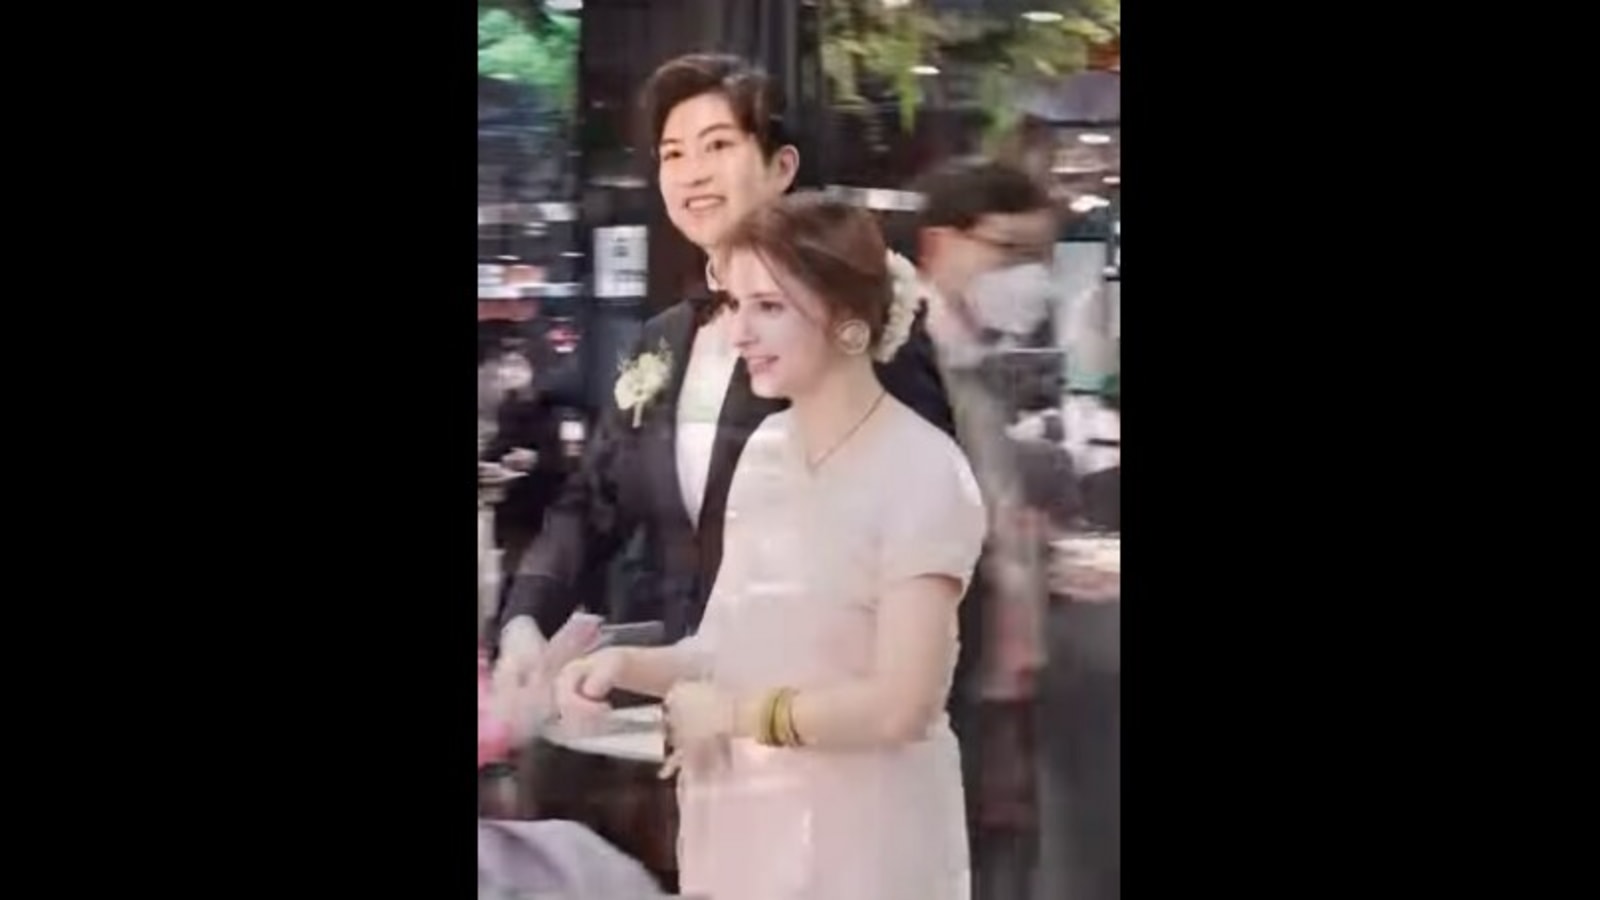 newly married korean couple